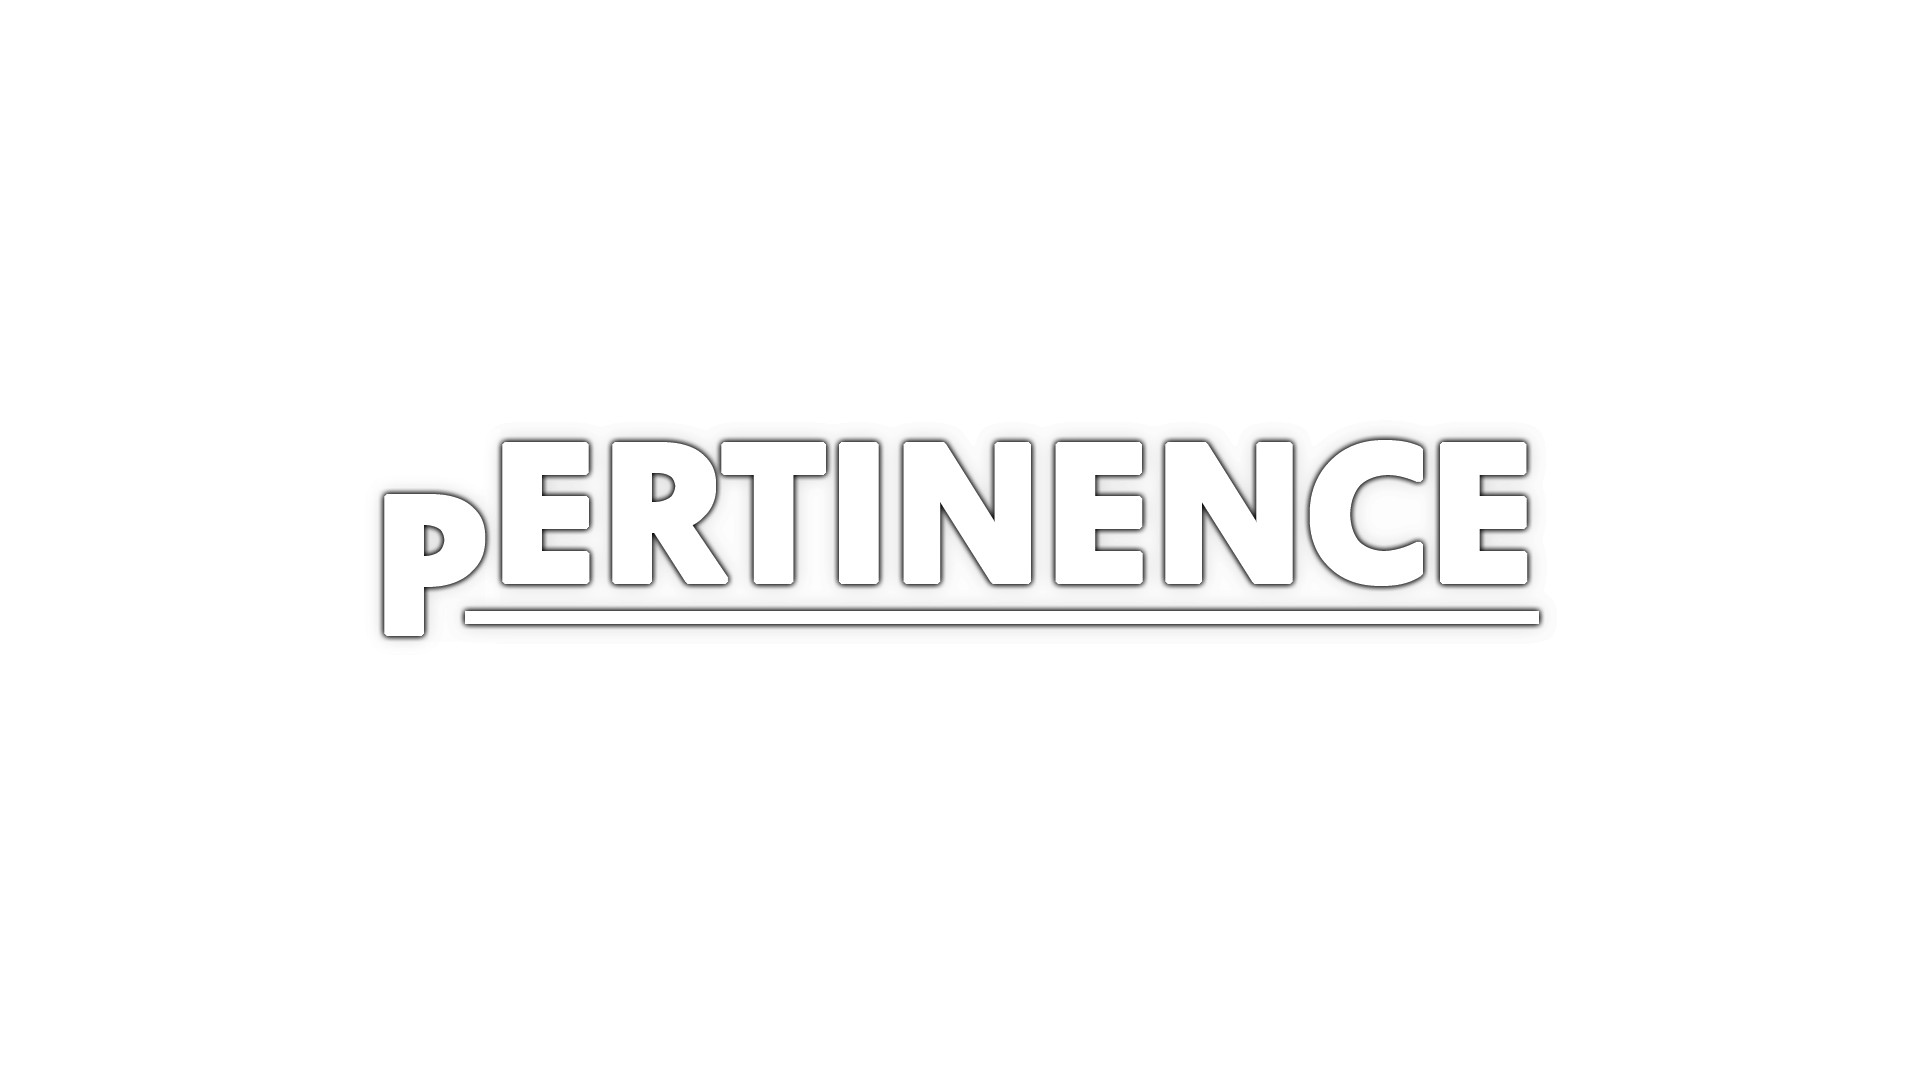 Pertinence Soundtrack Featured Screenshot #1